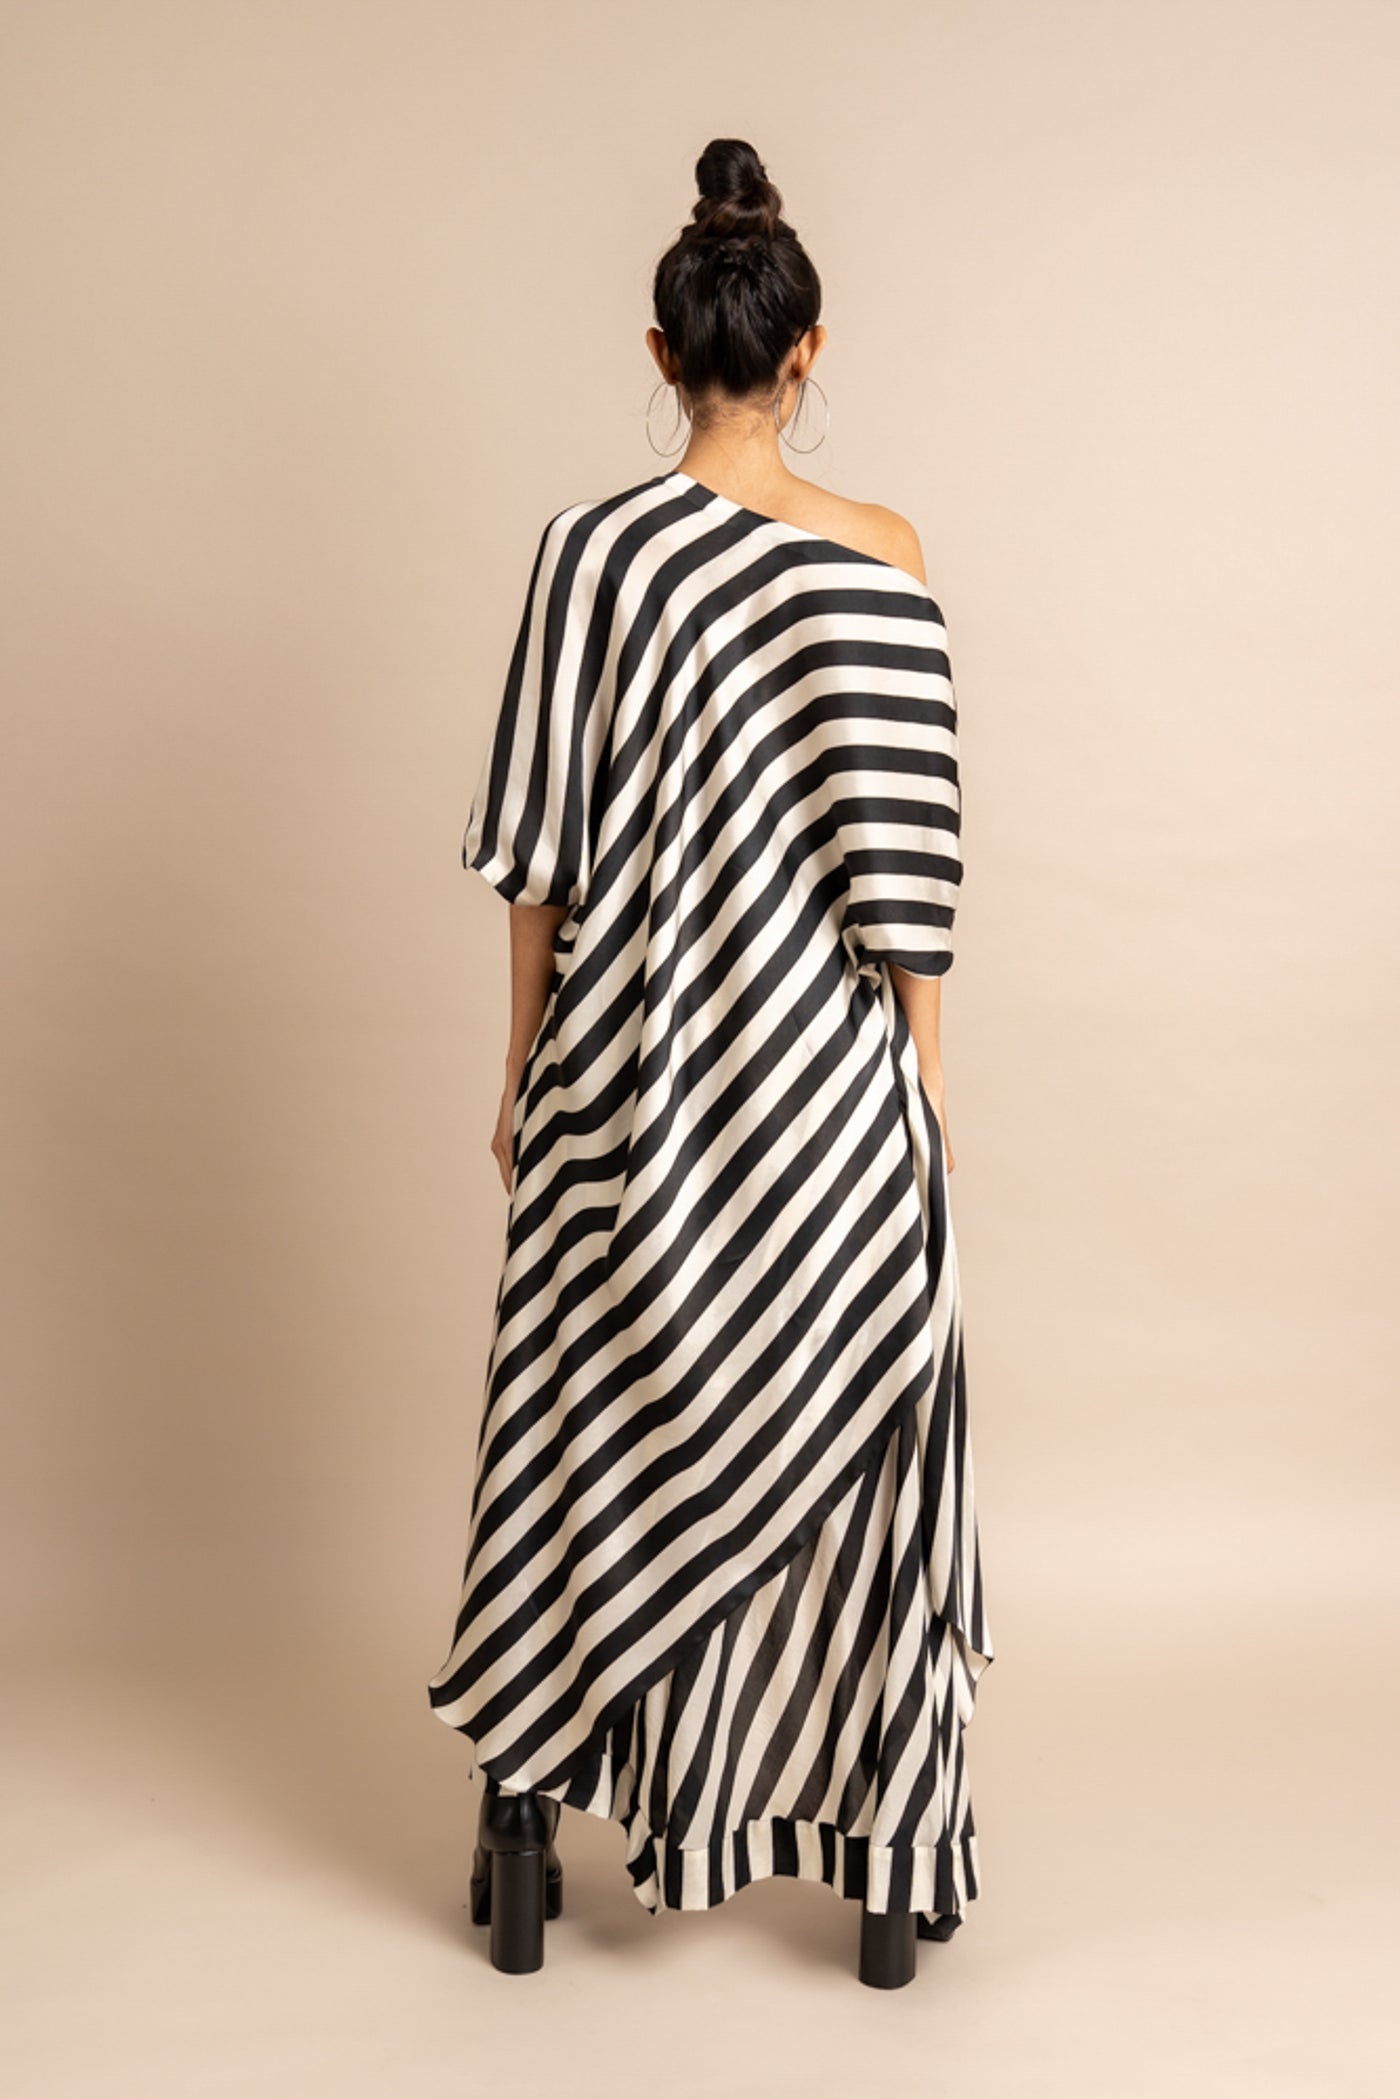 Nupur Kanoi Top With Skirt Black and White Online Shopping Melange Singapore Indian Designer Wear